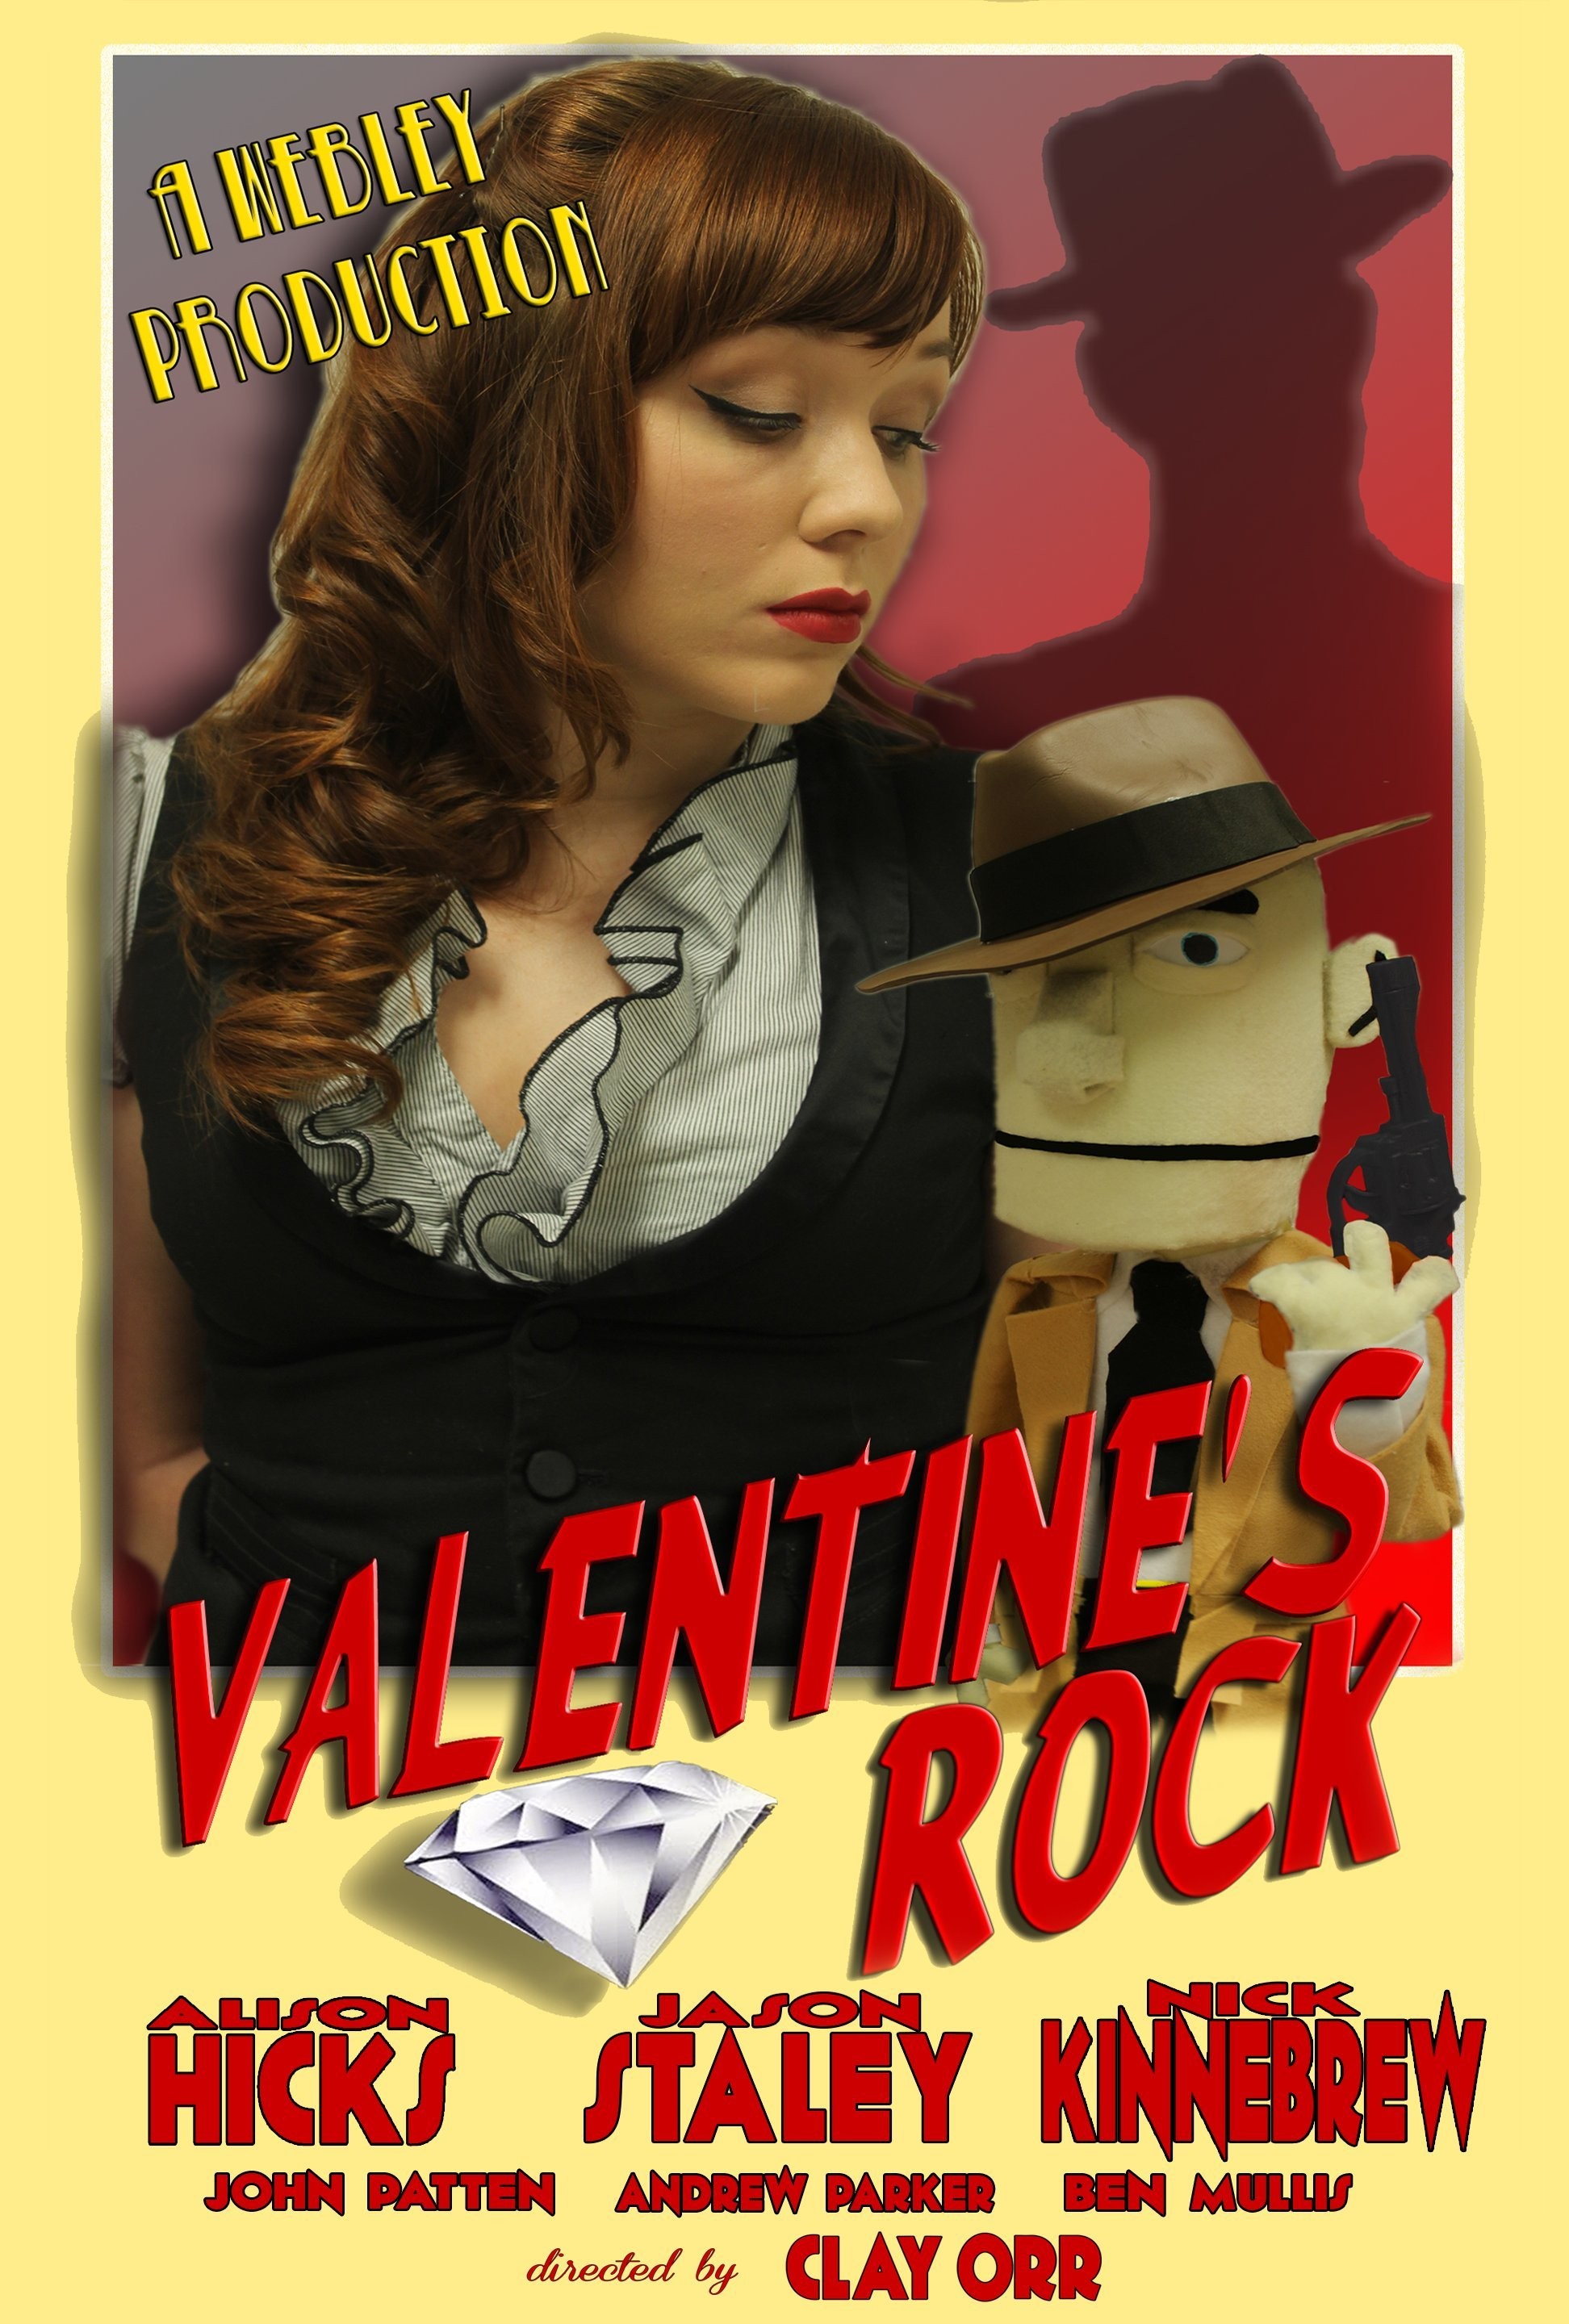 Mega Sized Movie Poster Image for Valentine's Rock